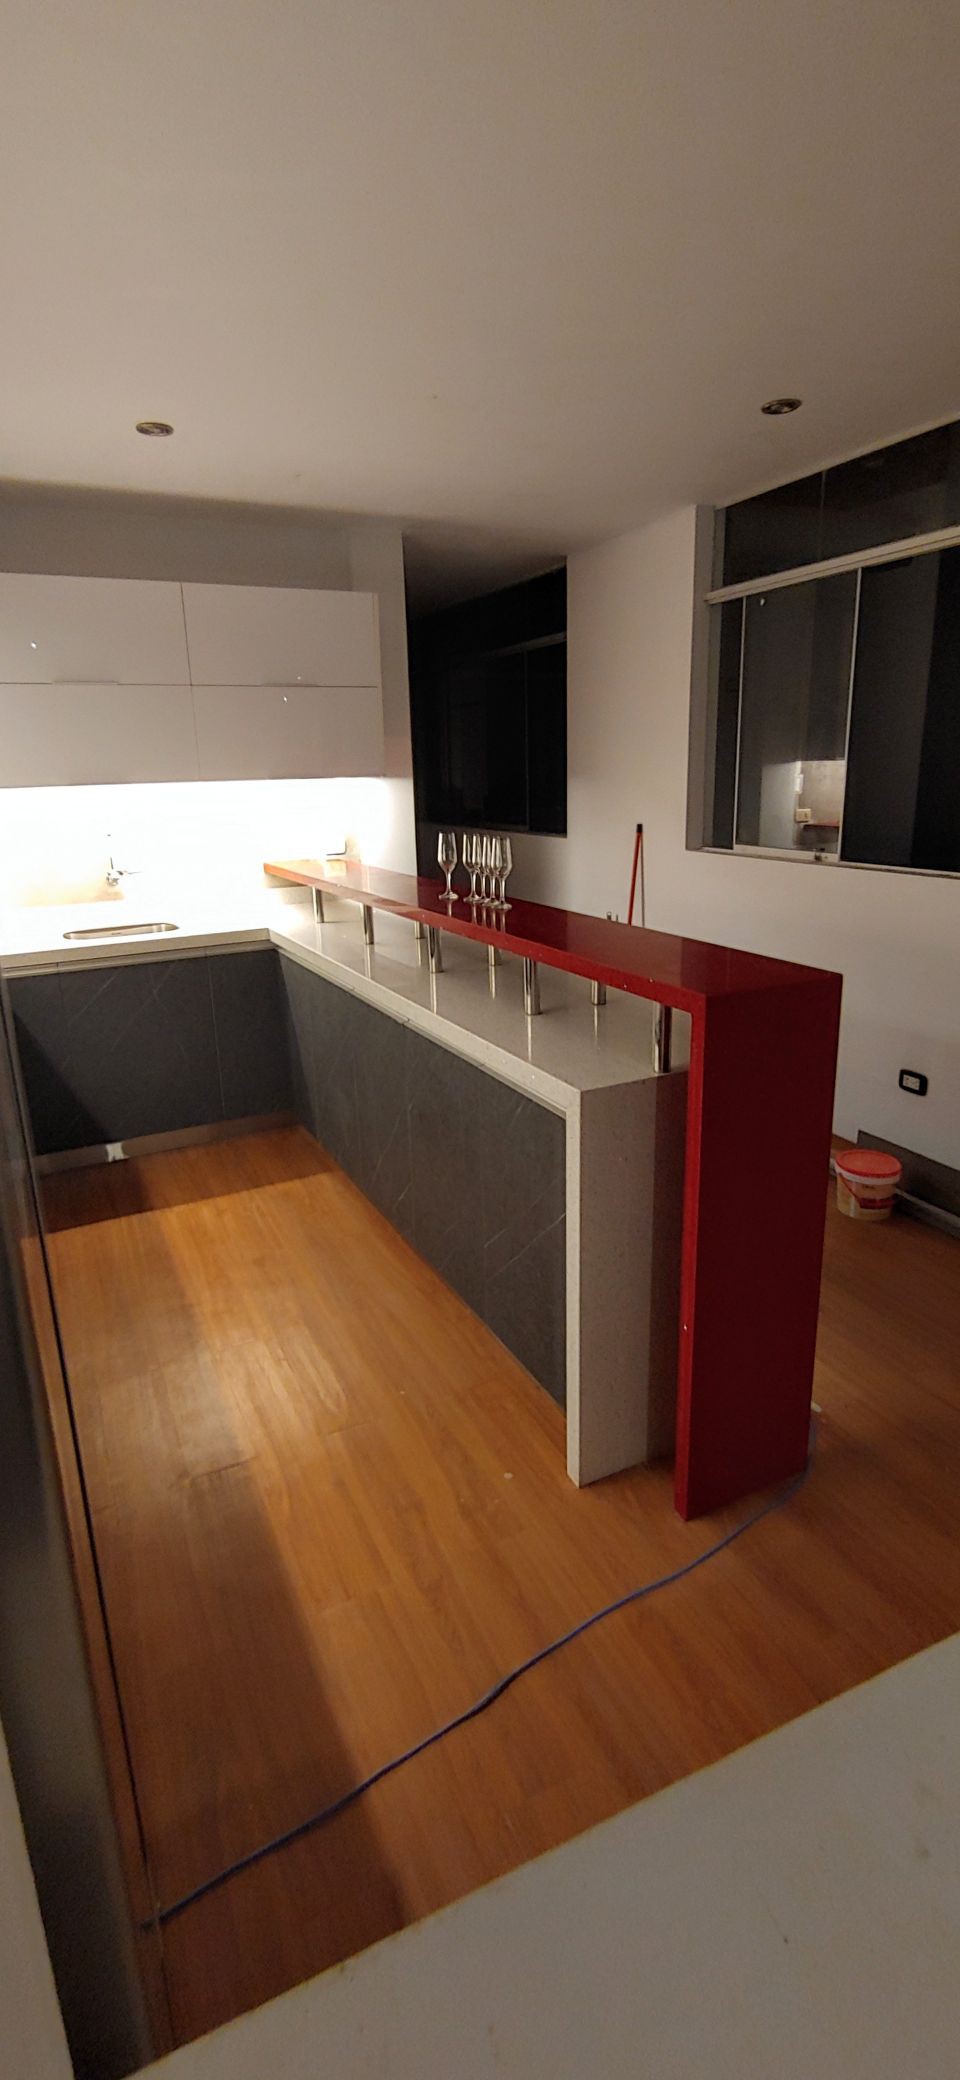 Departamentos de 100 m2 con: Sala+ comedor+kitechenet+ bar+1 dormitorio con baño + 4 dormitorios+ baño compartido.